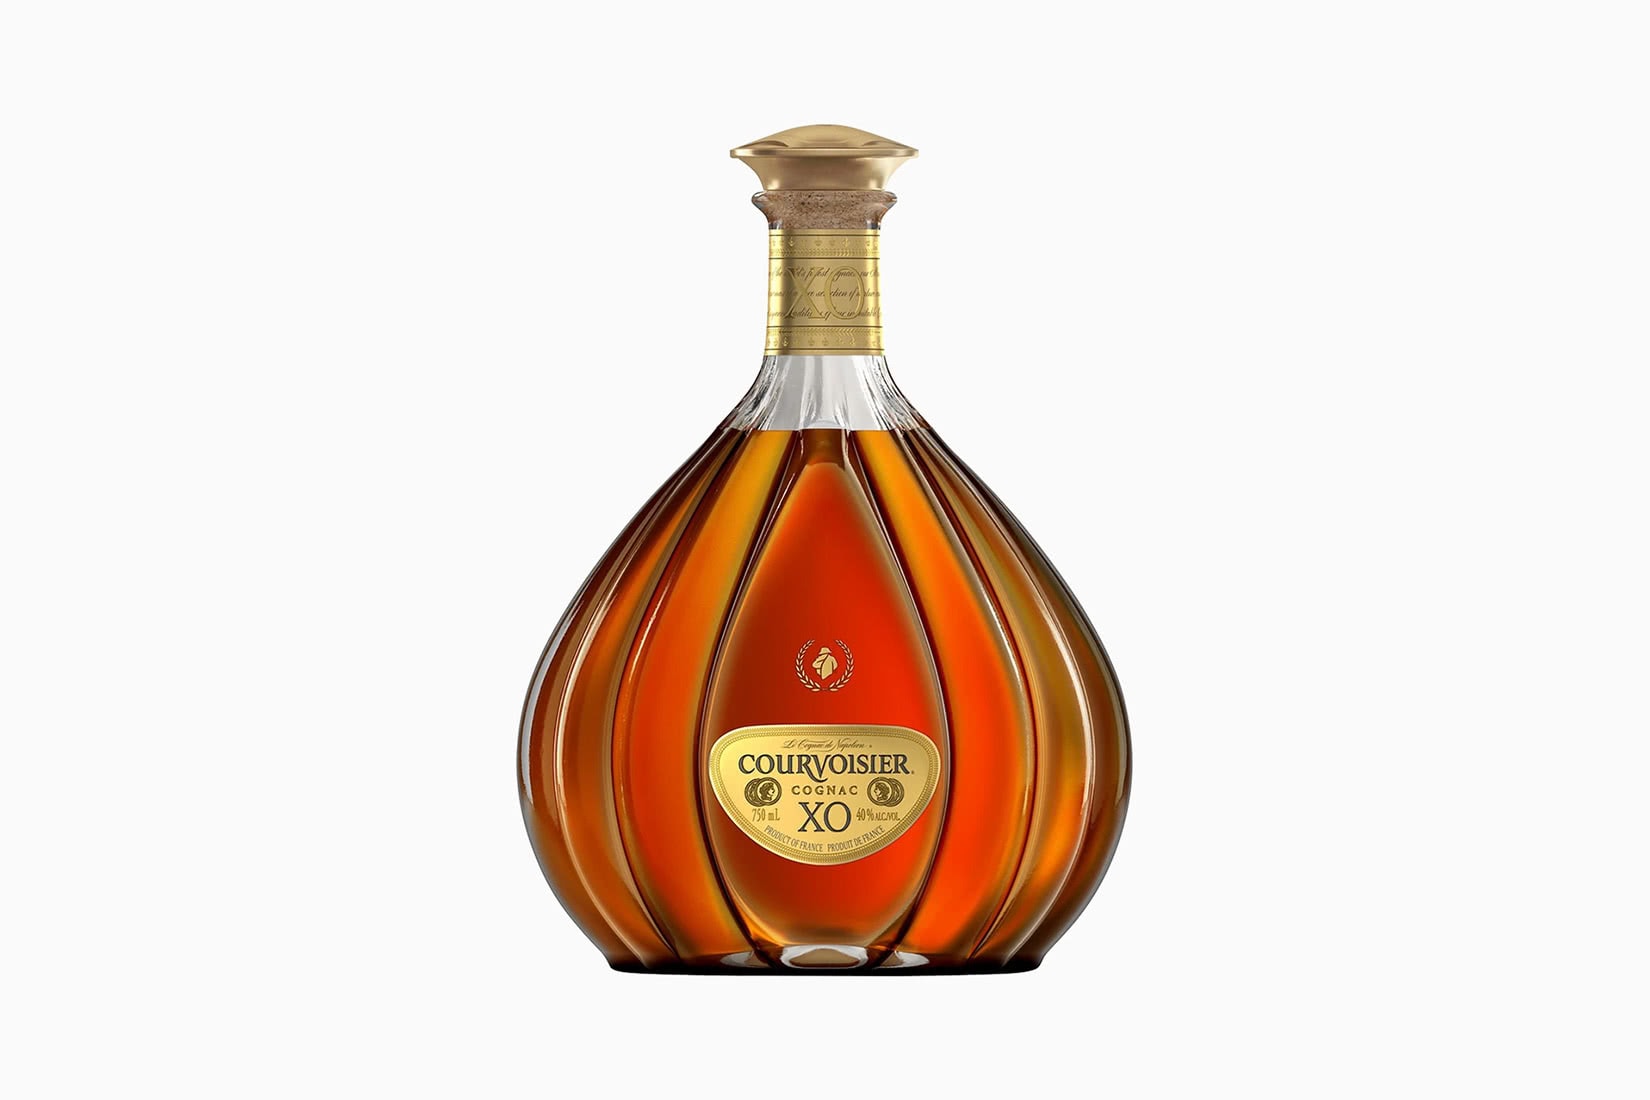 Коньяк за час. Excellent коньяк. Коньяк Courvoisier. Hardy perfection Cognac. Коньяк французский Courvoisier XO Imperial 50мл.